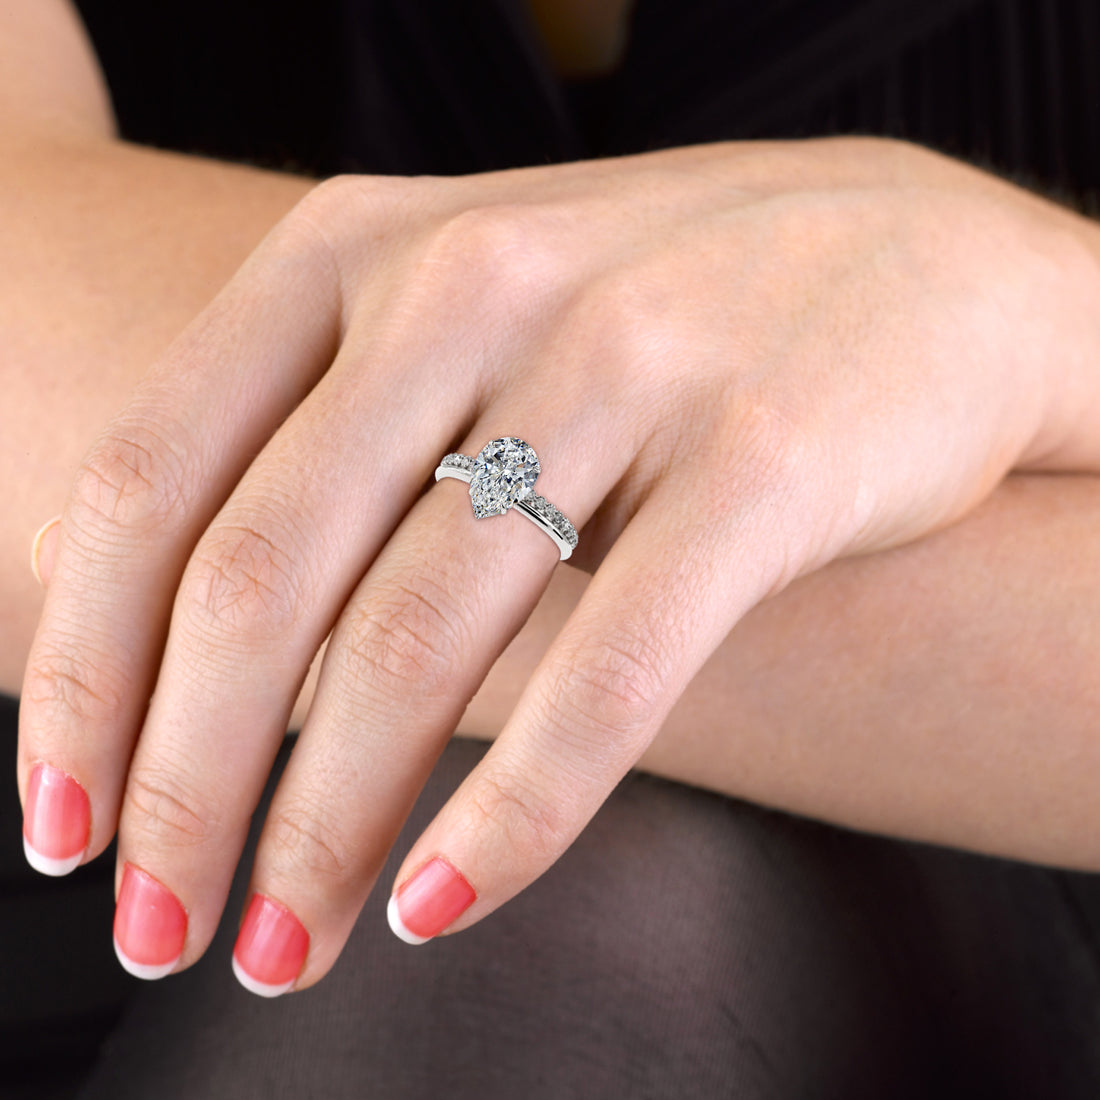 20 Stunning Wedding Engagement Rings That Will Blow You Away -  Elegantweddinginvites.com Blog